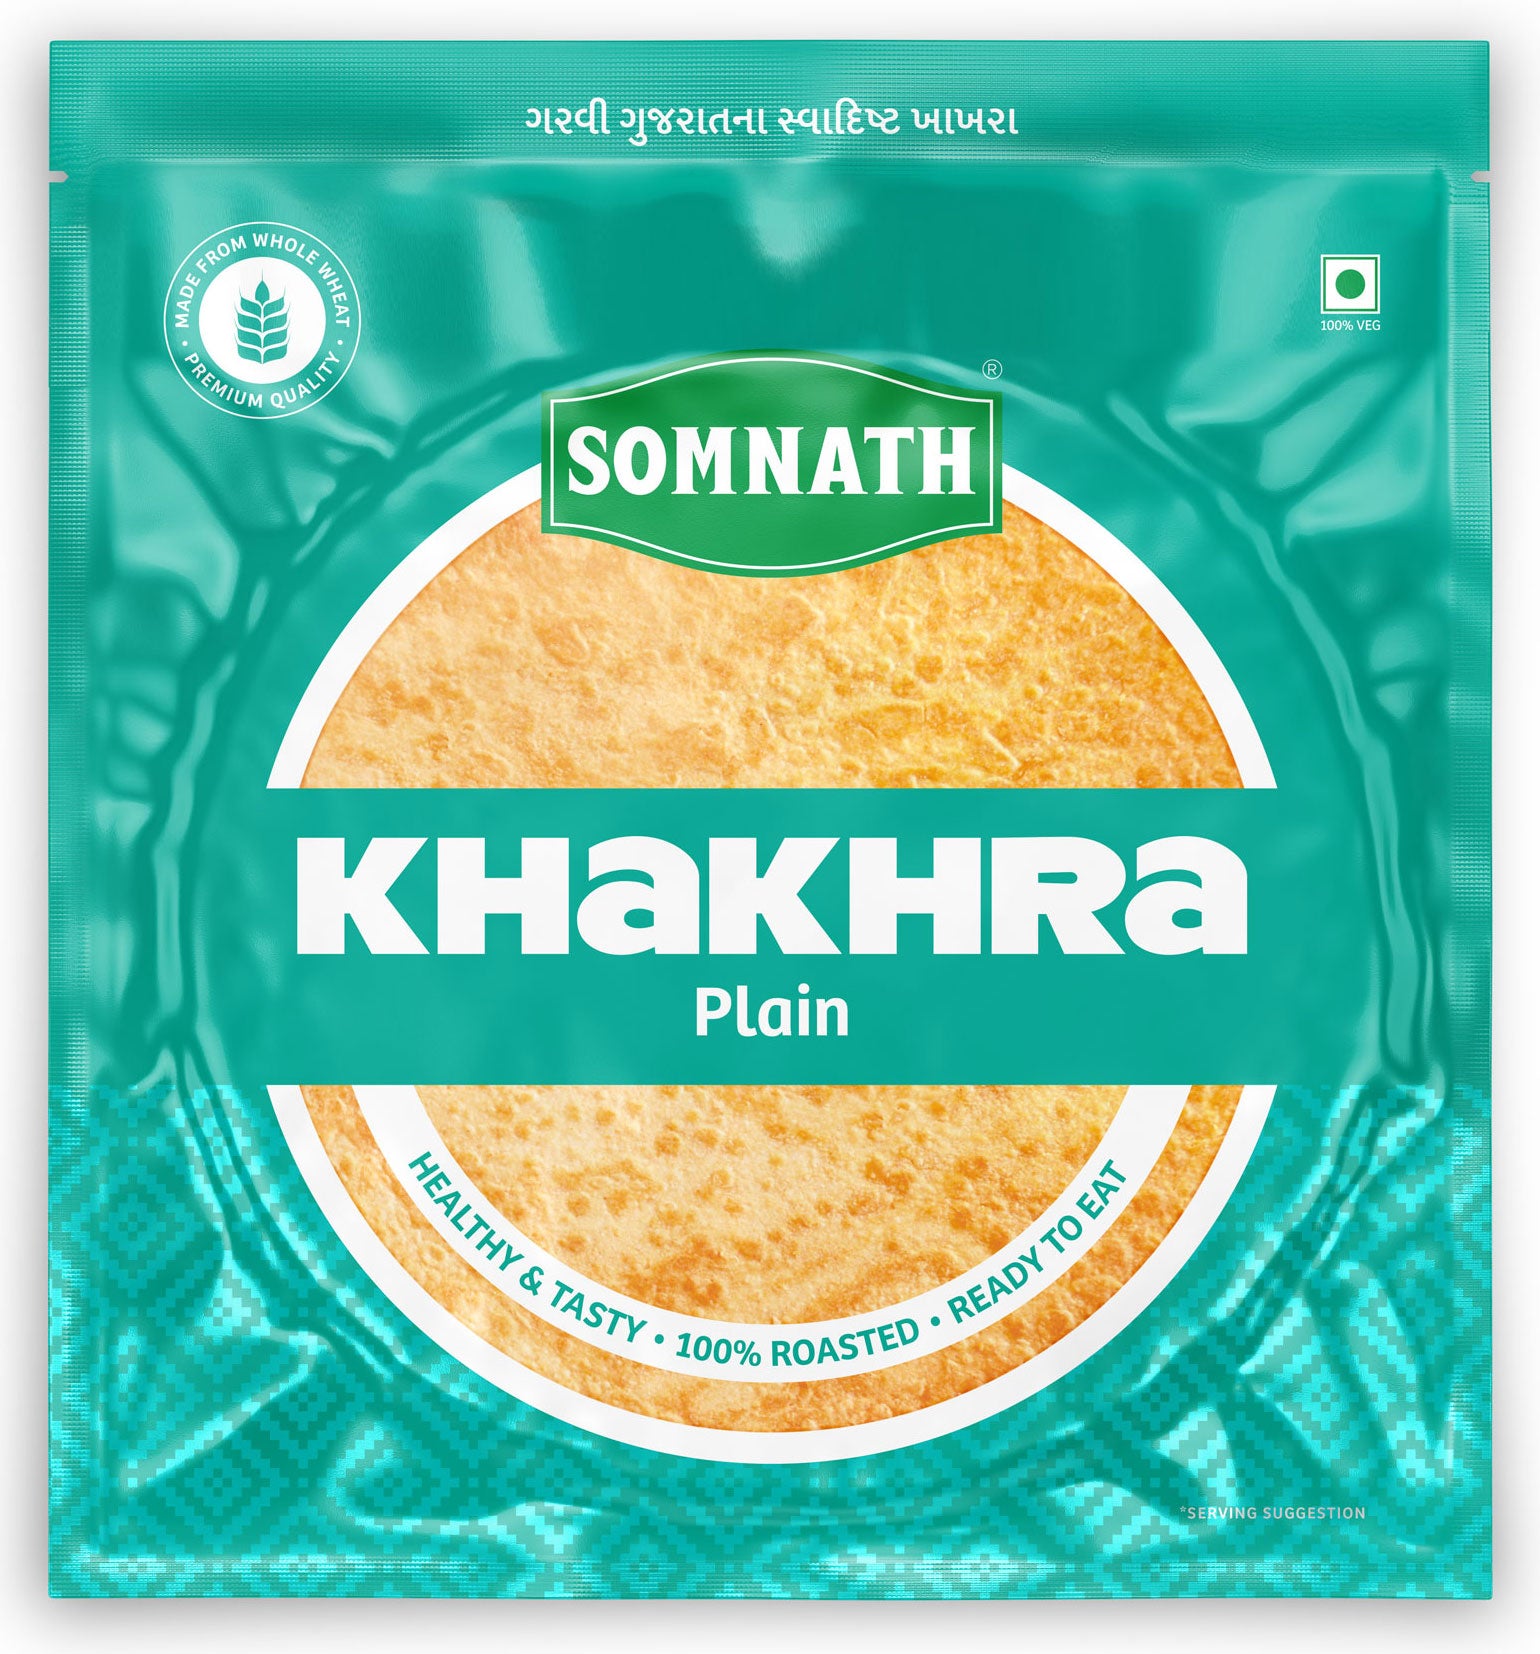 All in One Khakhra Combo(Mathi, Masala, Plain, Kothmir Marcha, Garlic Chilli).